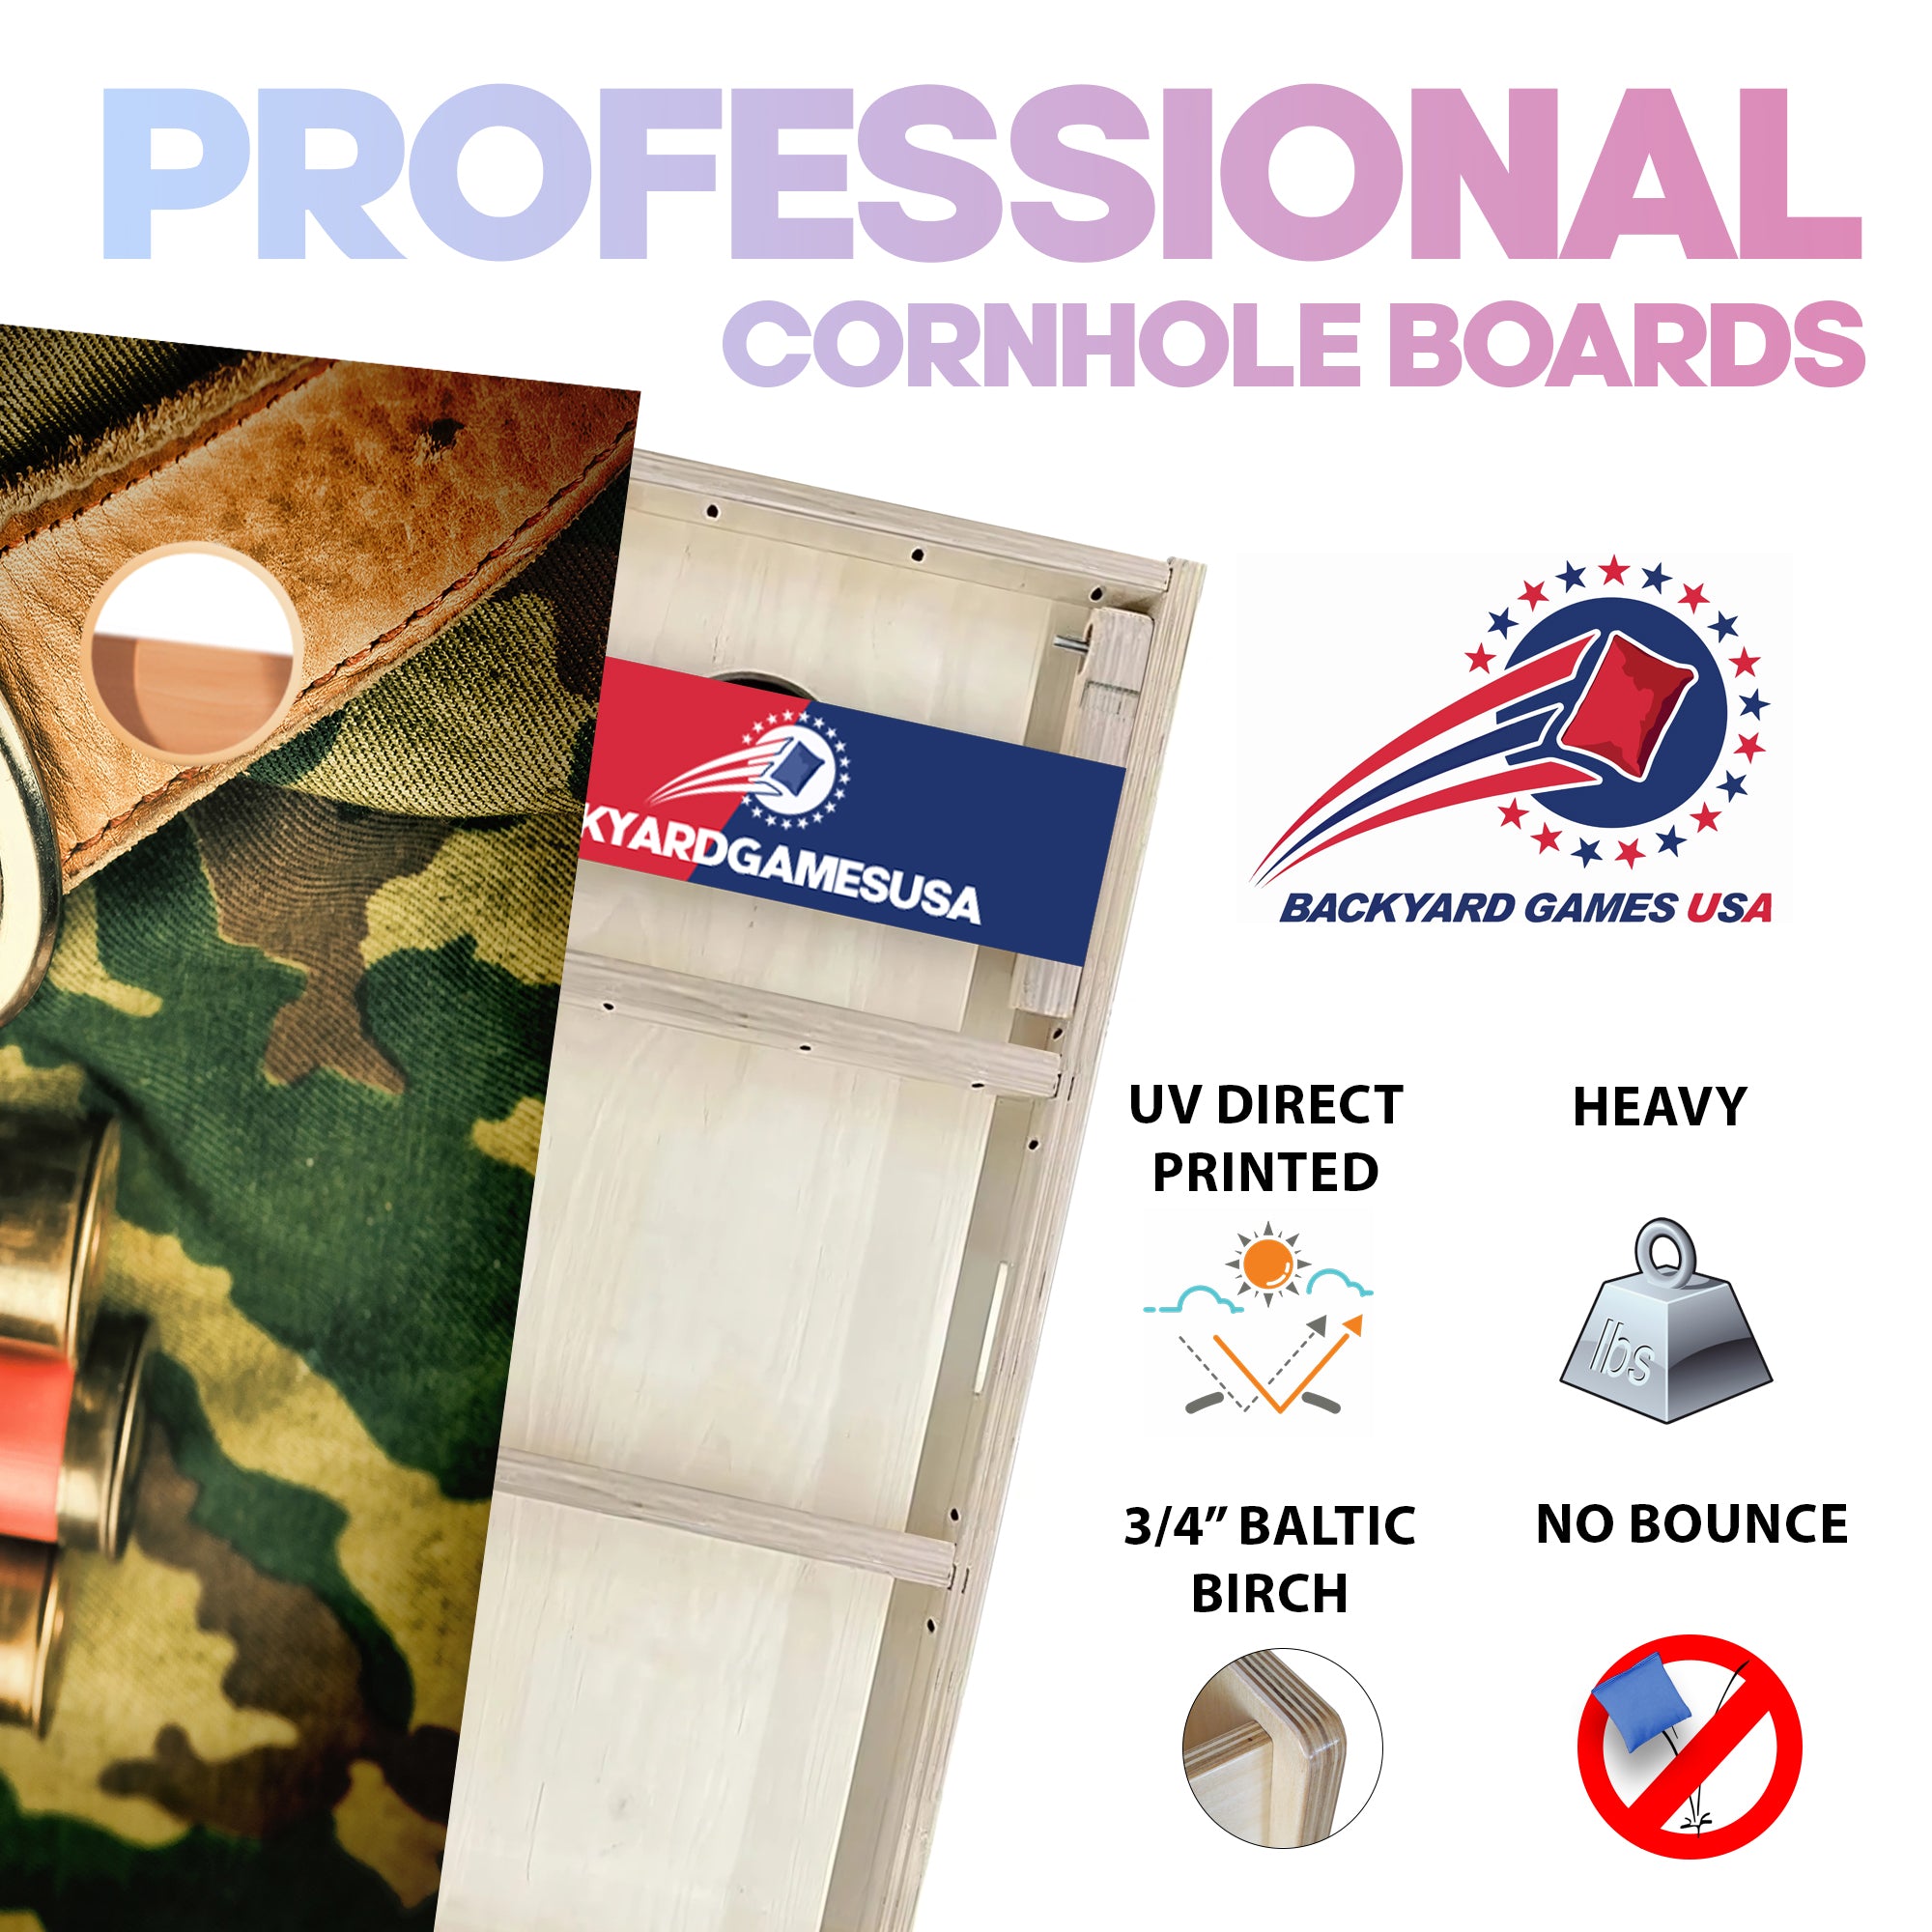 Camo Slugs Professional Cornhole Boards